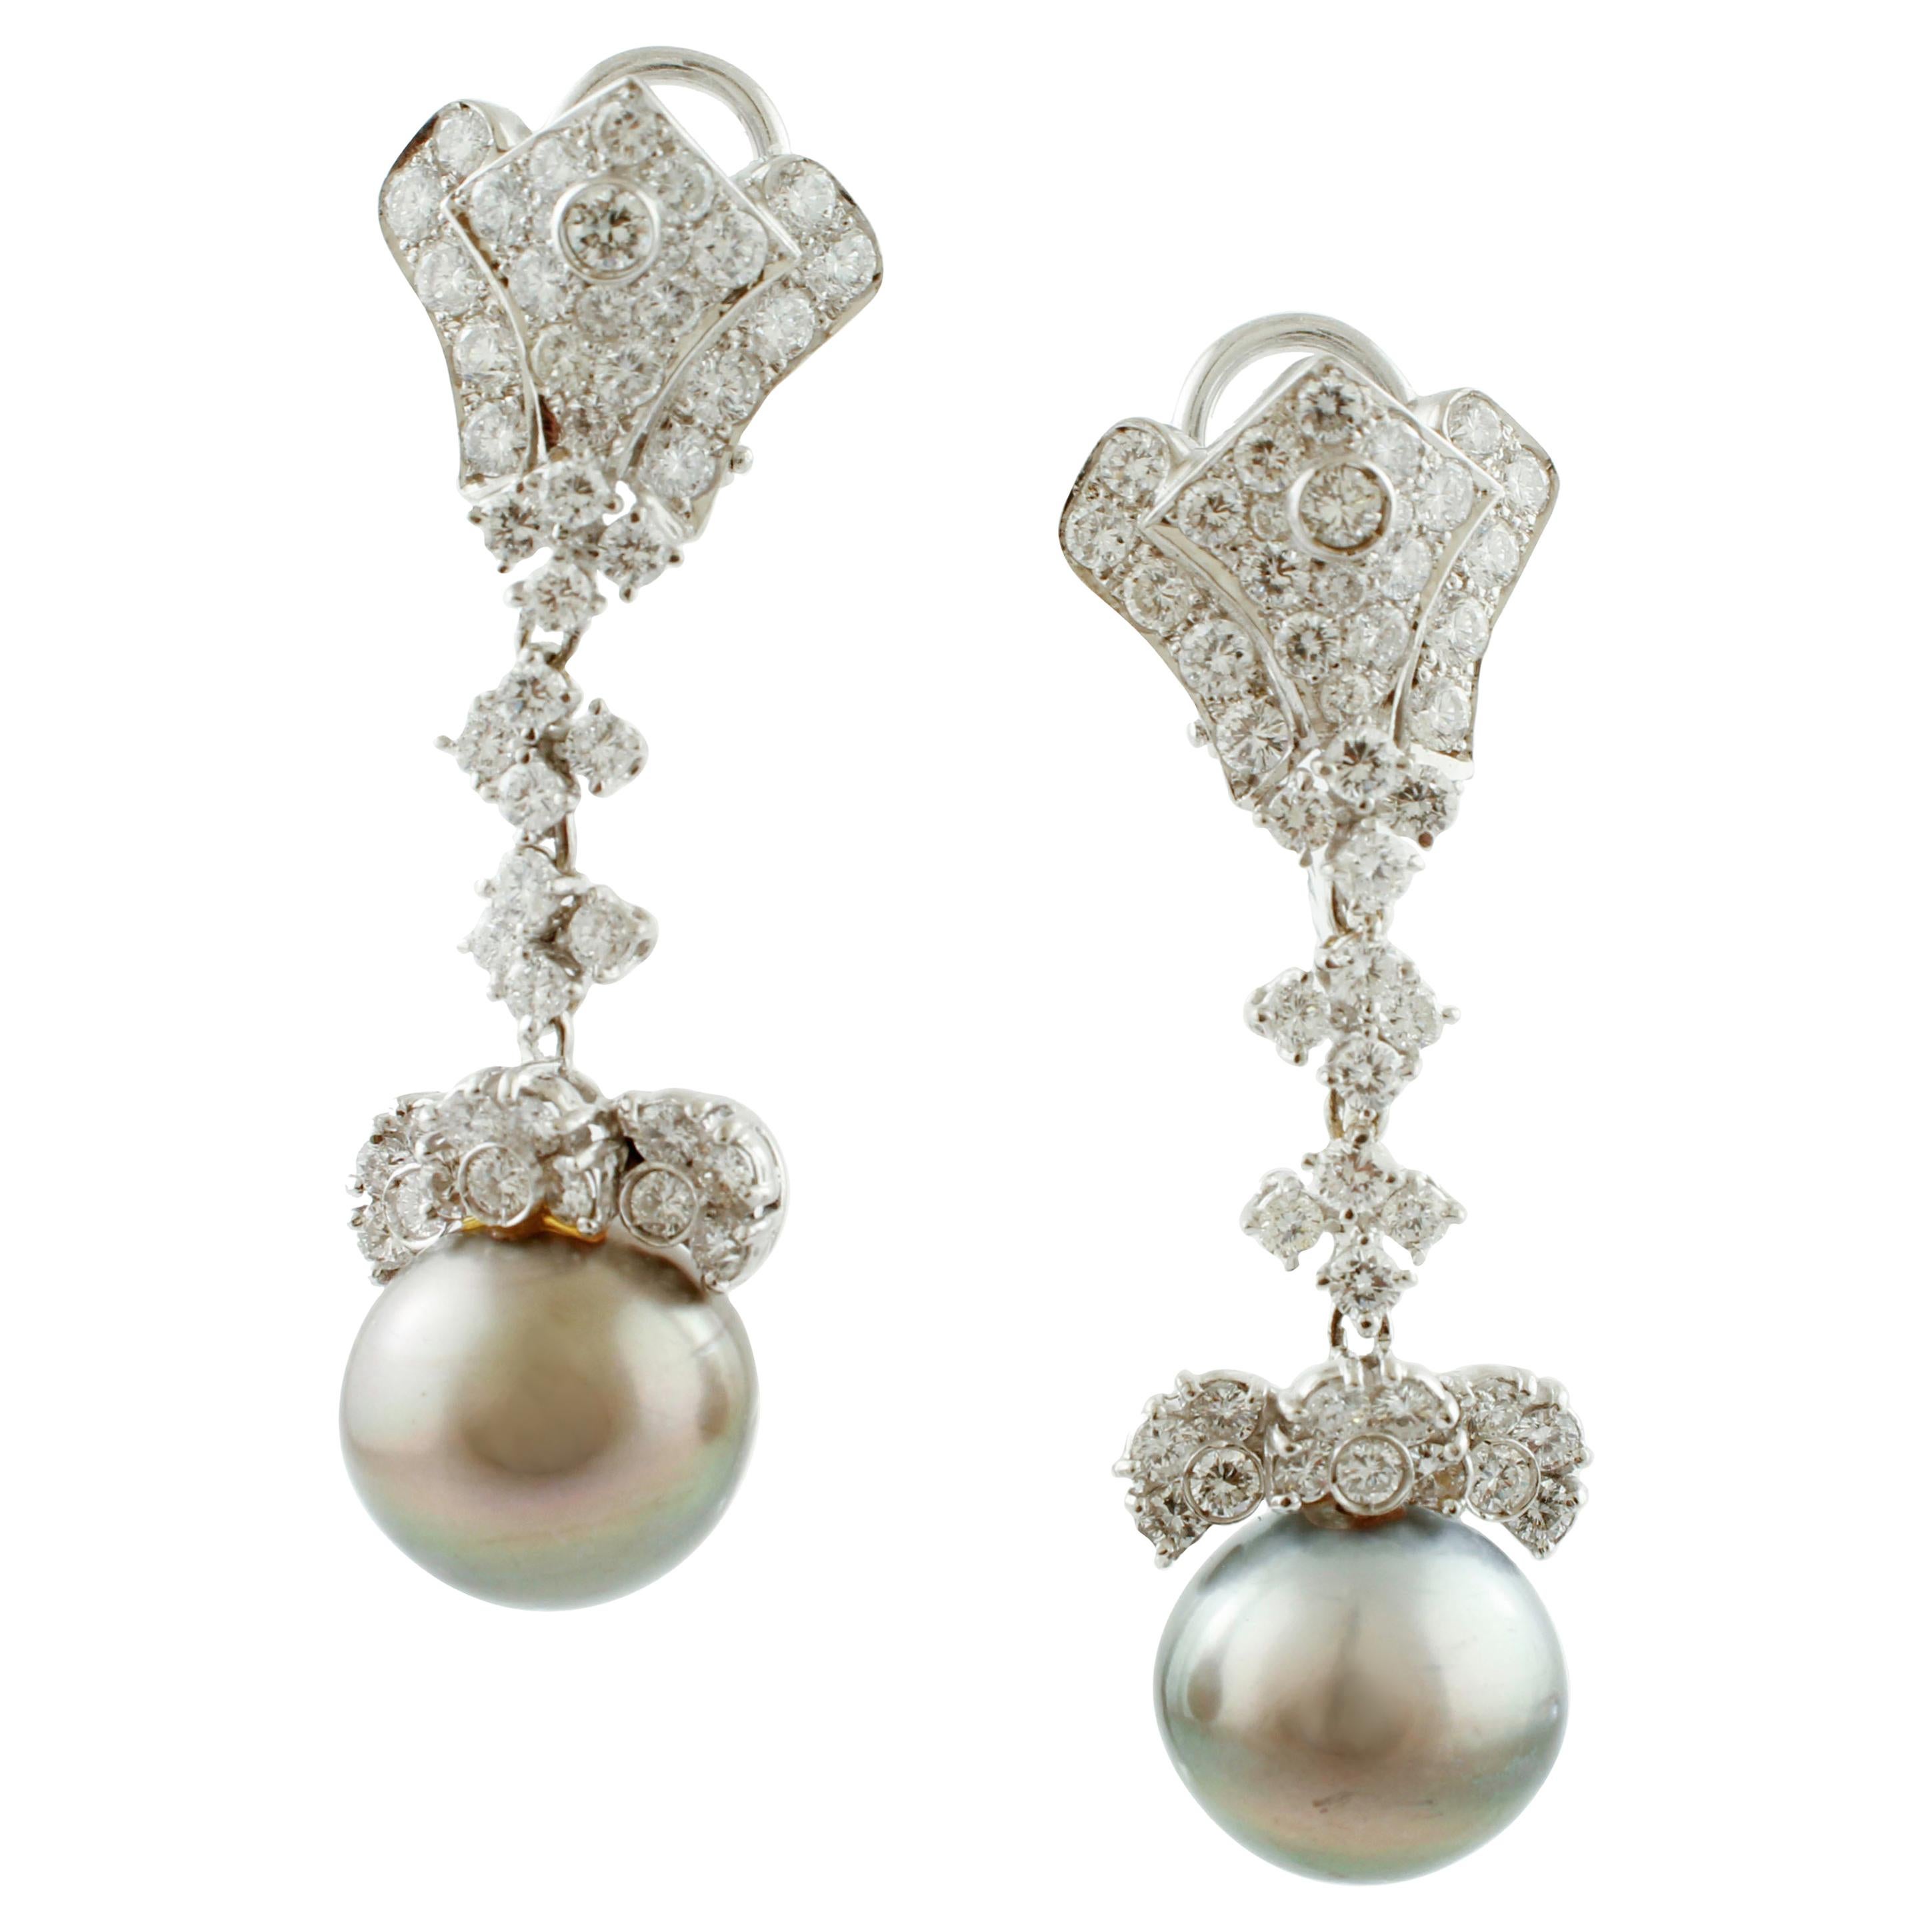 Diamants blancs, perles des mers du sud de 40 carats, boucles d'oreilles clip-on/drop en or 18 carats